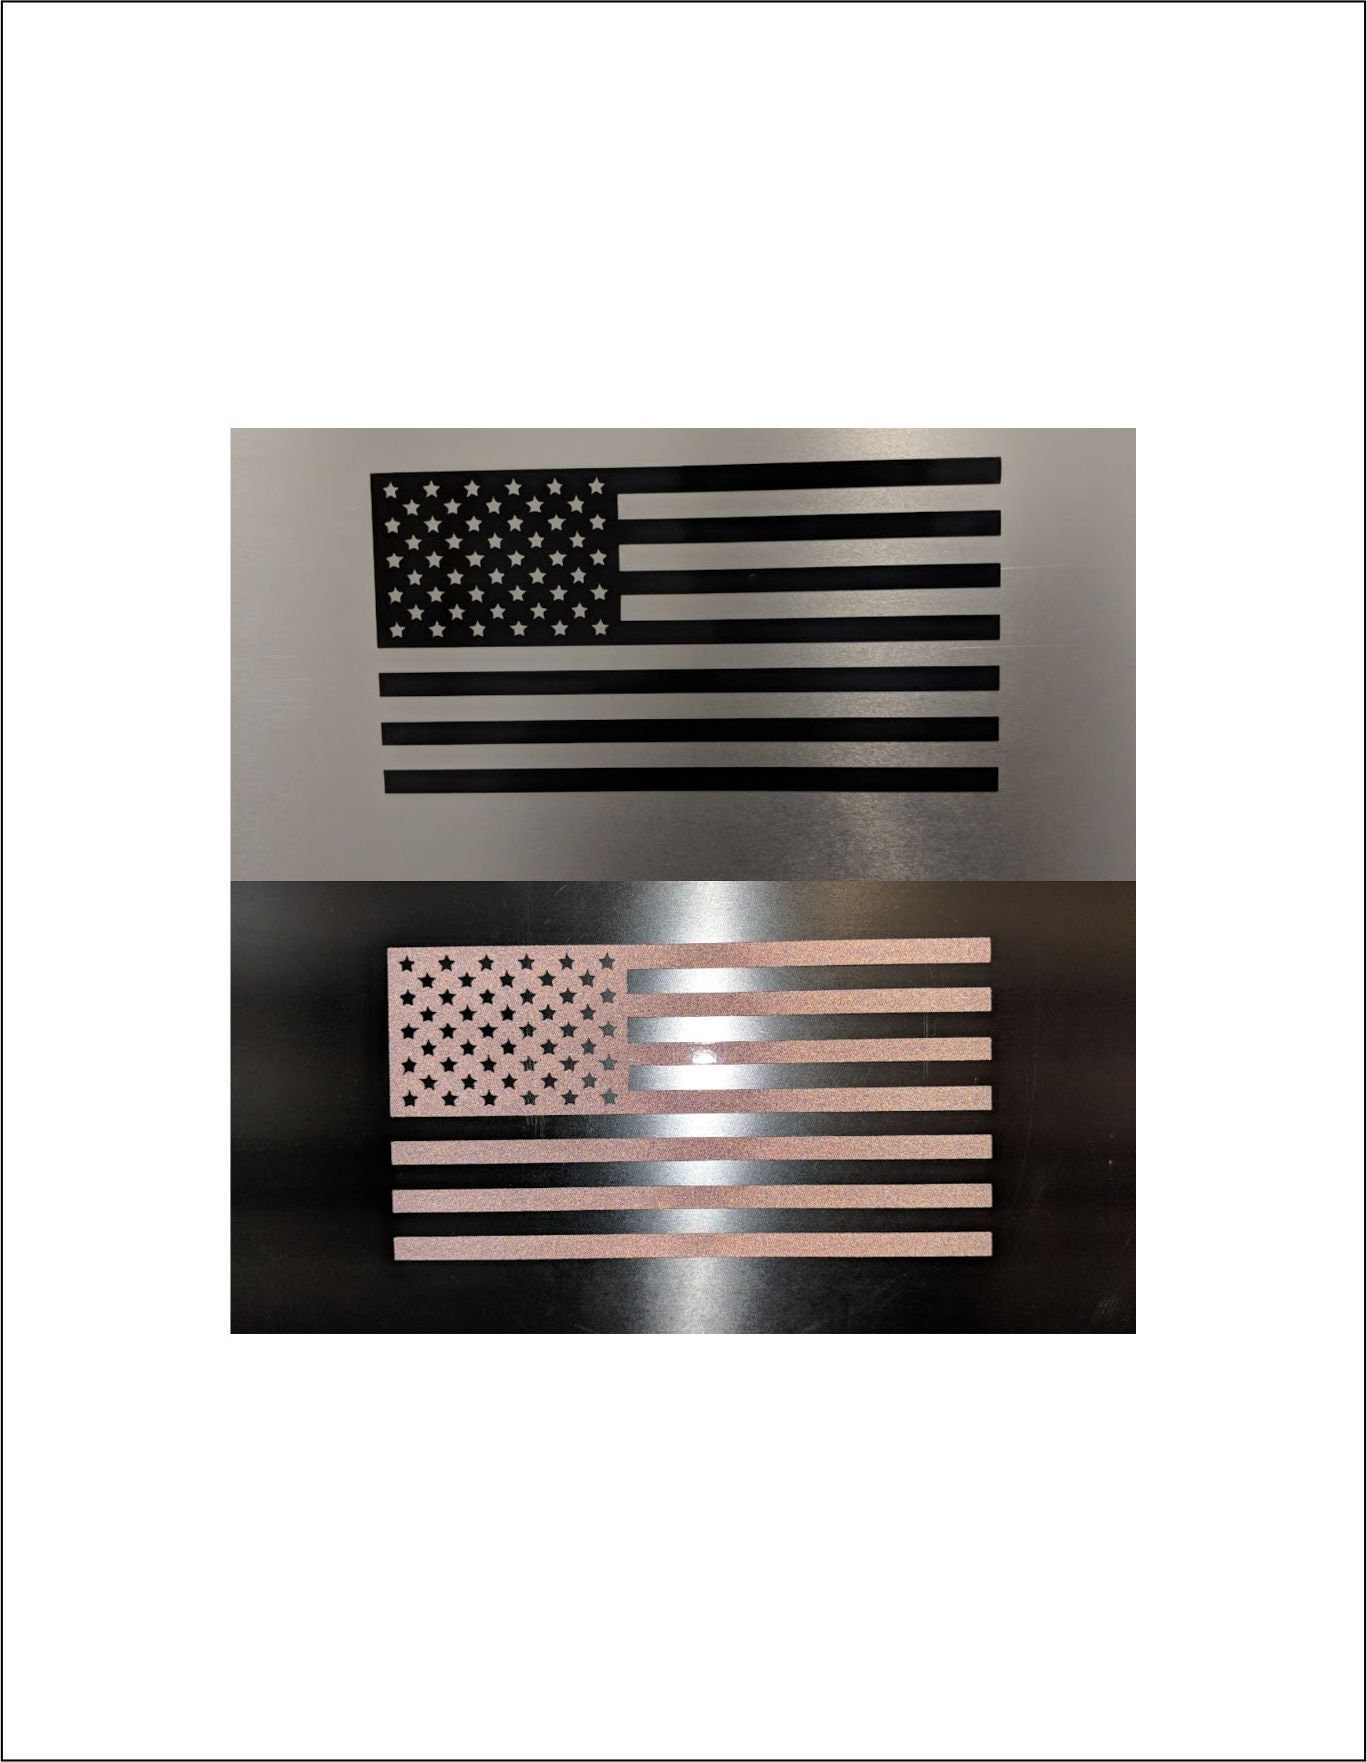 Liberia Country Flag Reflective Decal Bumper Sticker